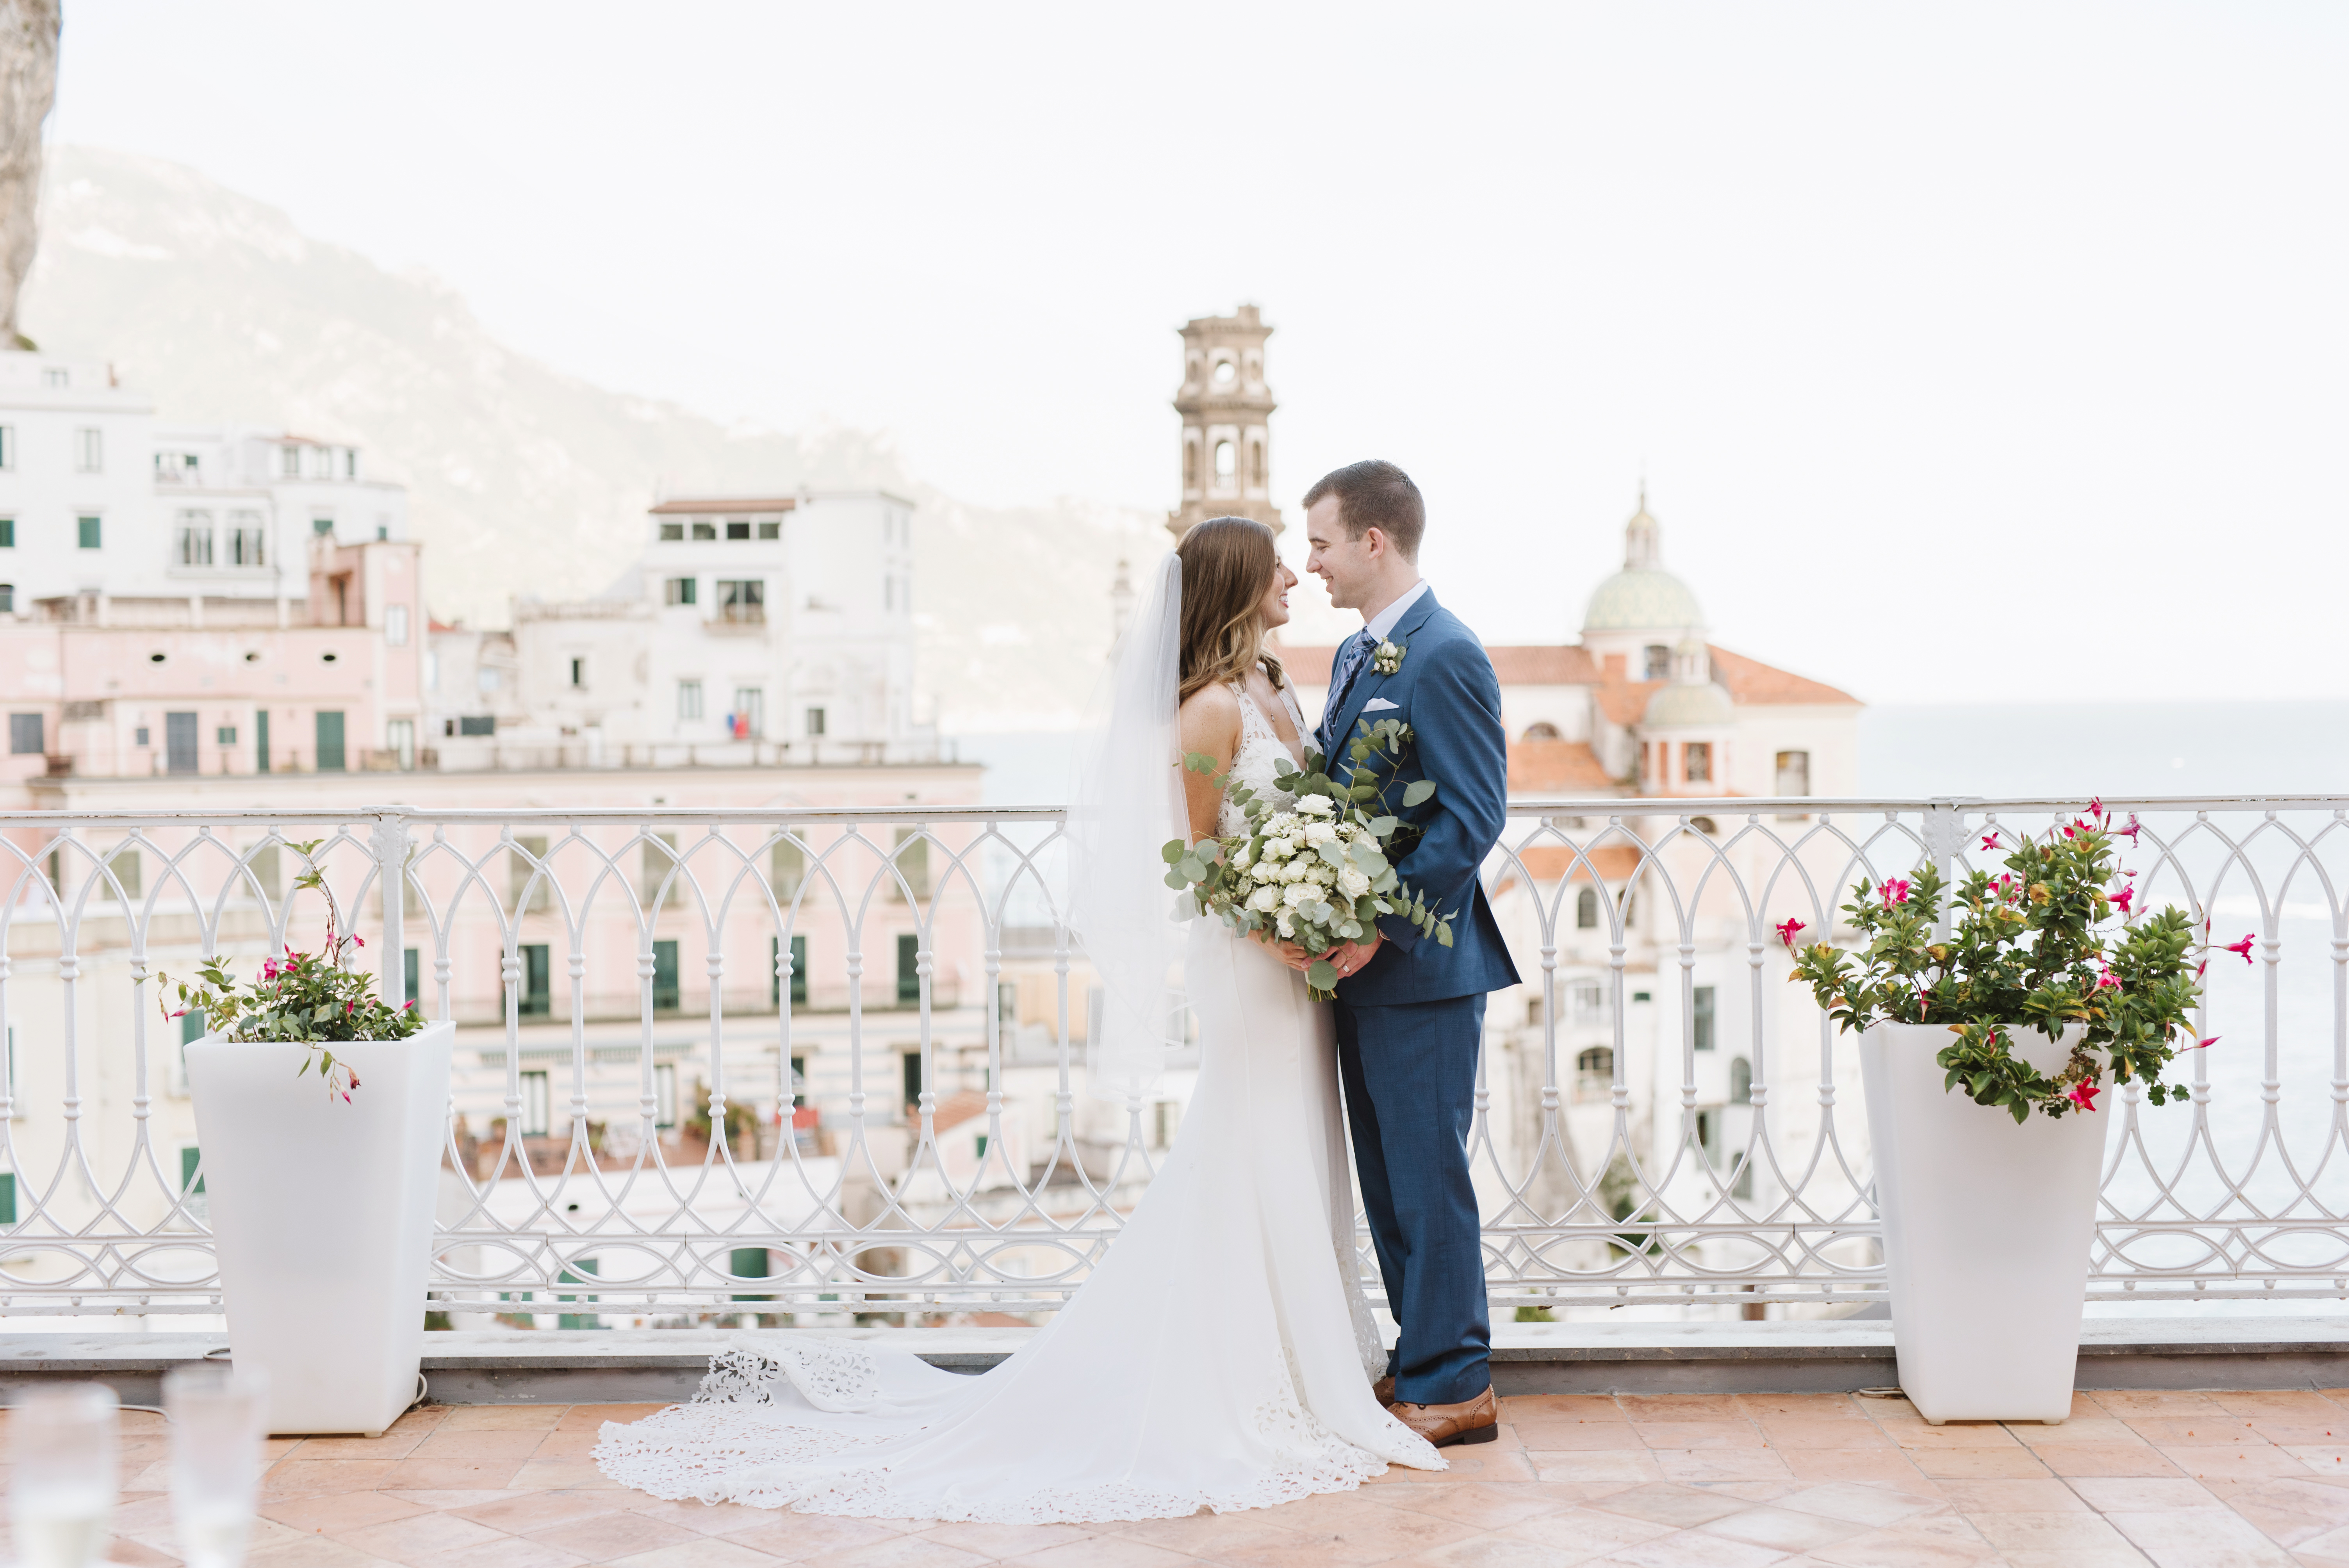 Amalfi Coast elopement photography by Italy wedding photographer Cristy Angulo | www.cristyangulo.com